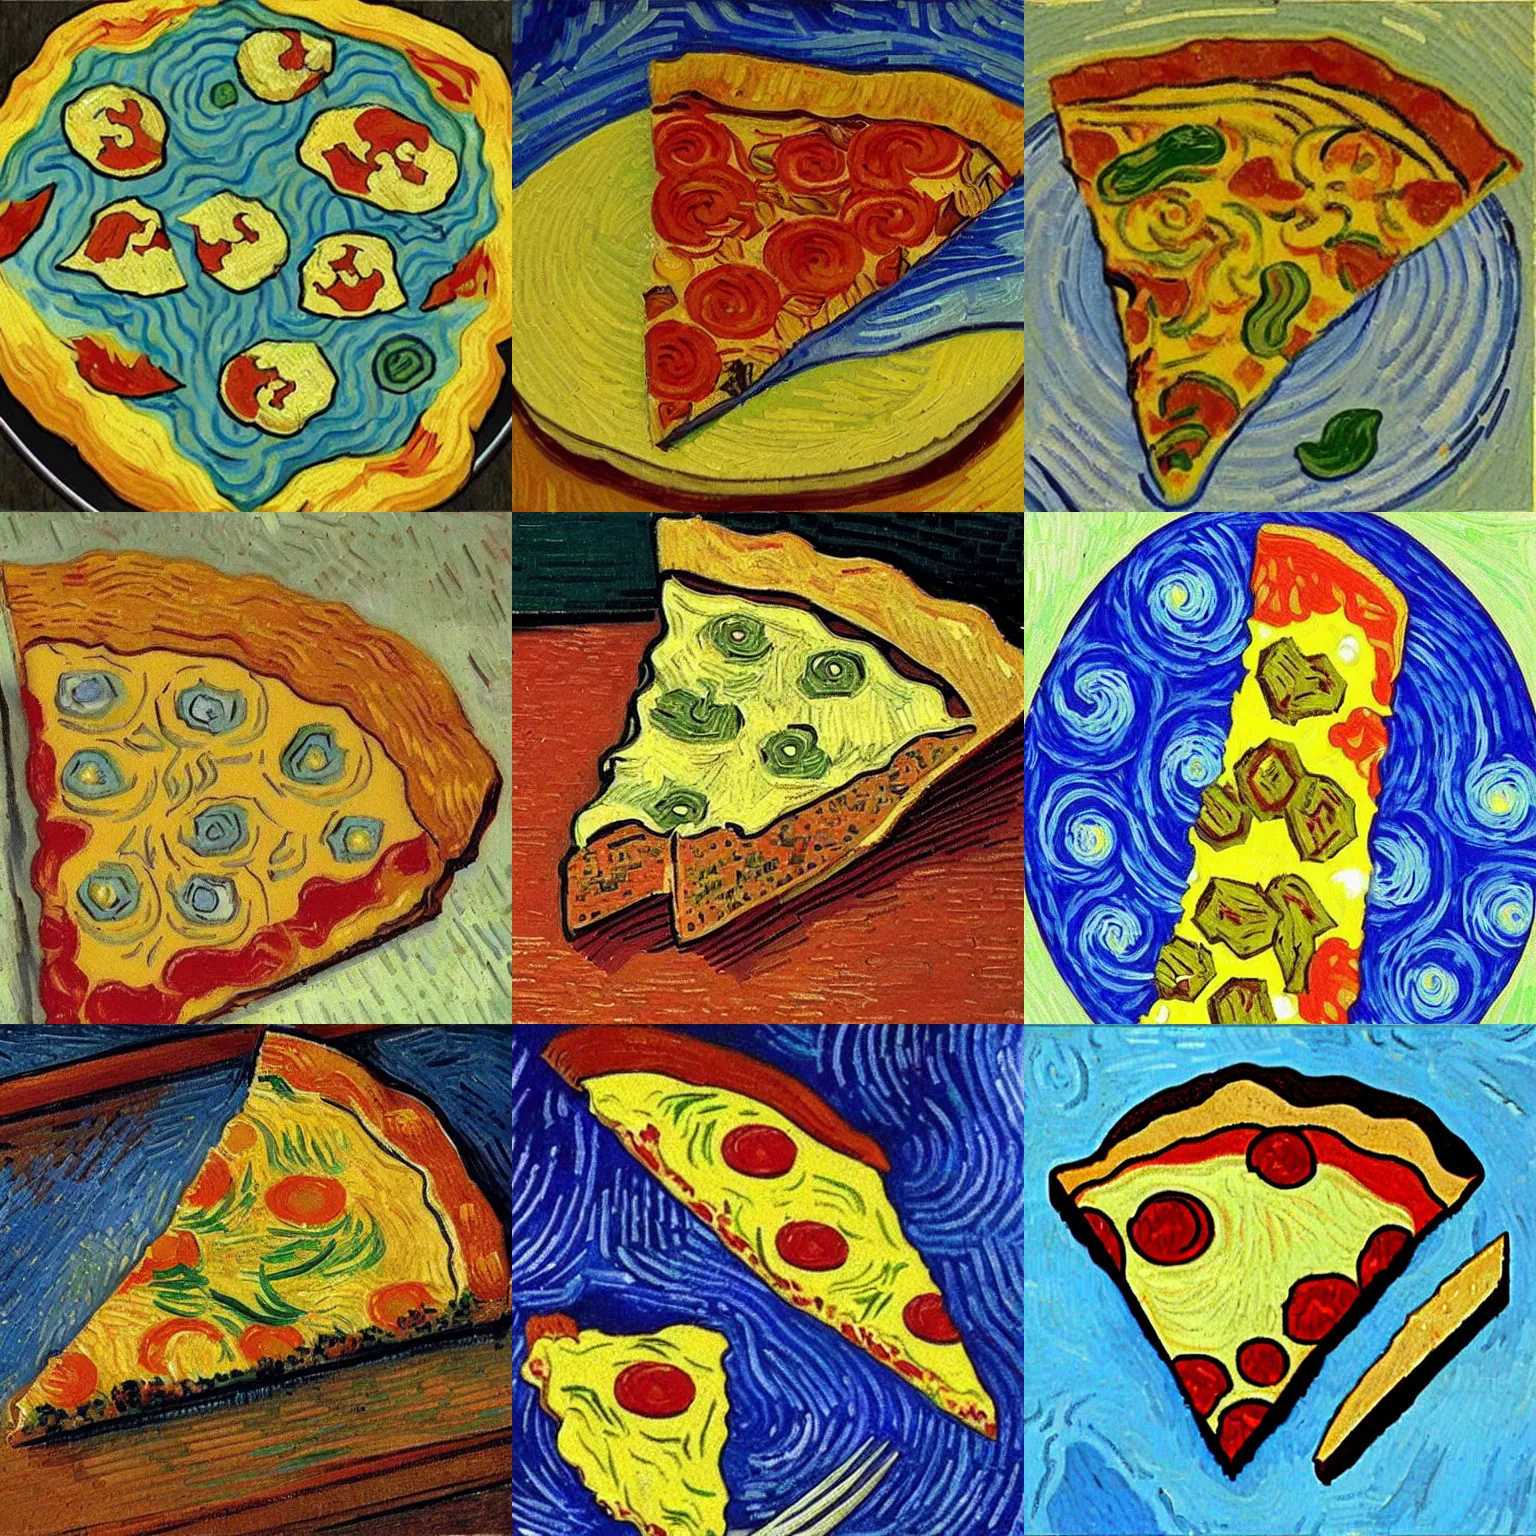 Prompt: Slice of Pizza - Van Gogh